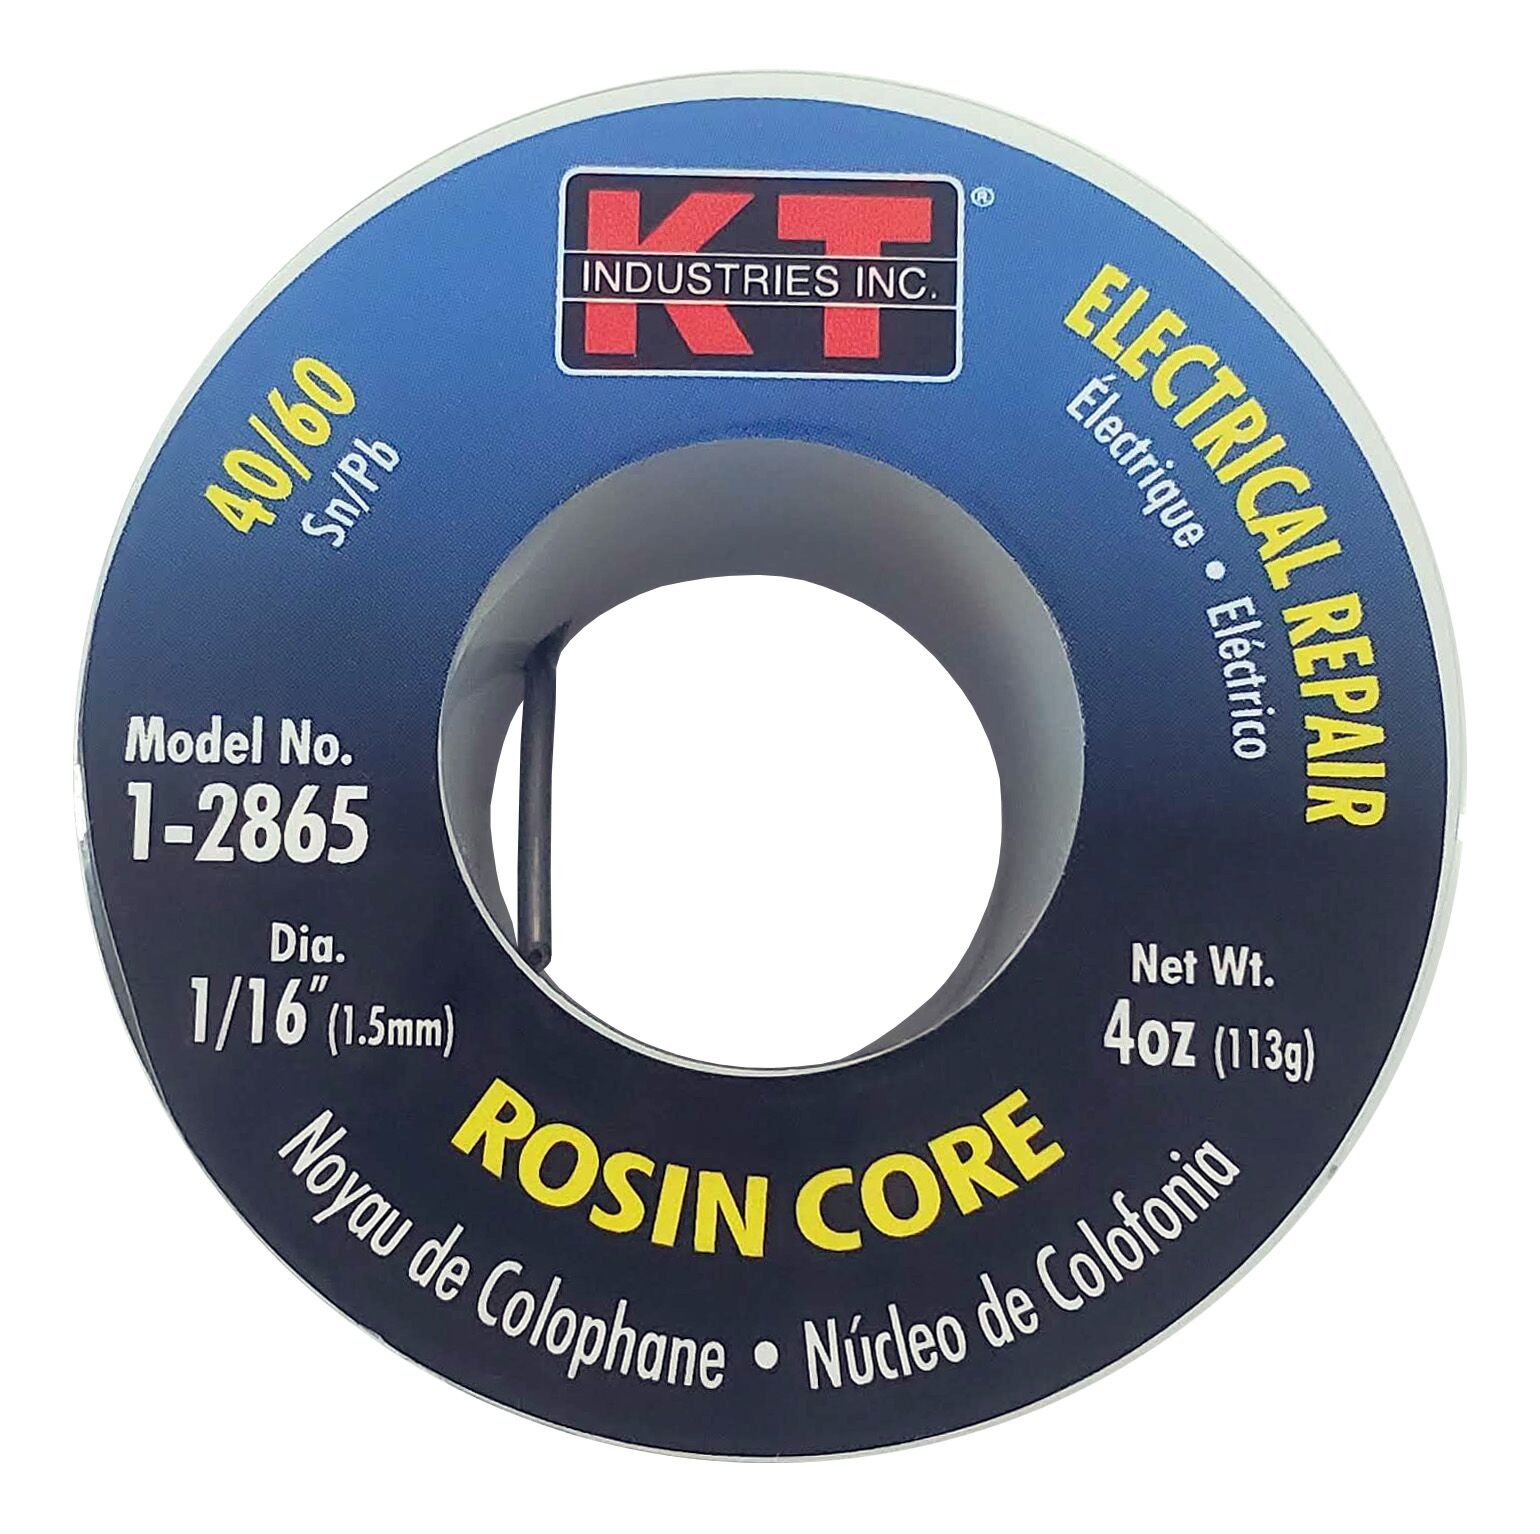 Rosin Core 1/4 Lb 1/16" DI